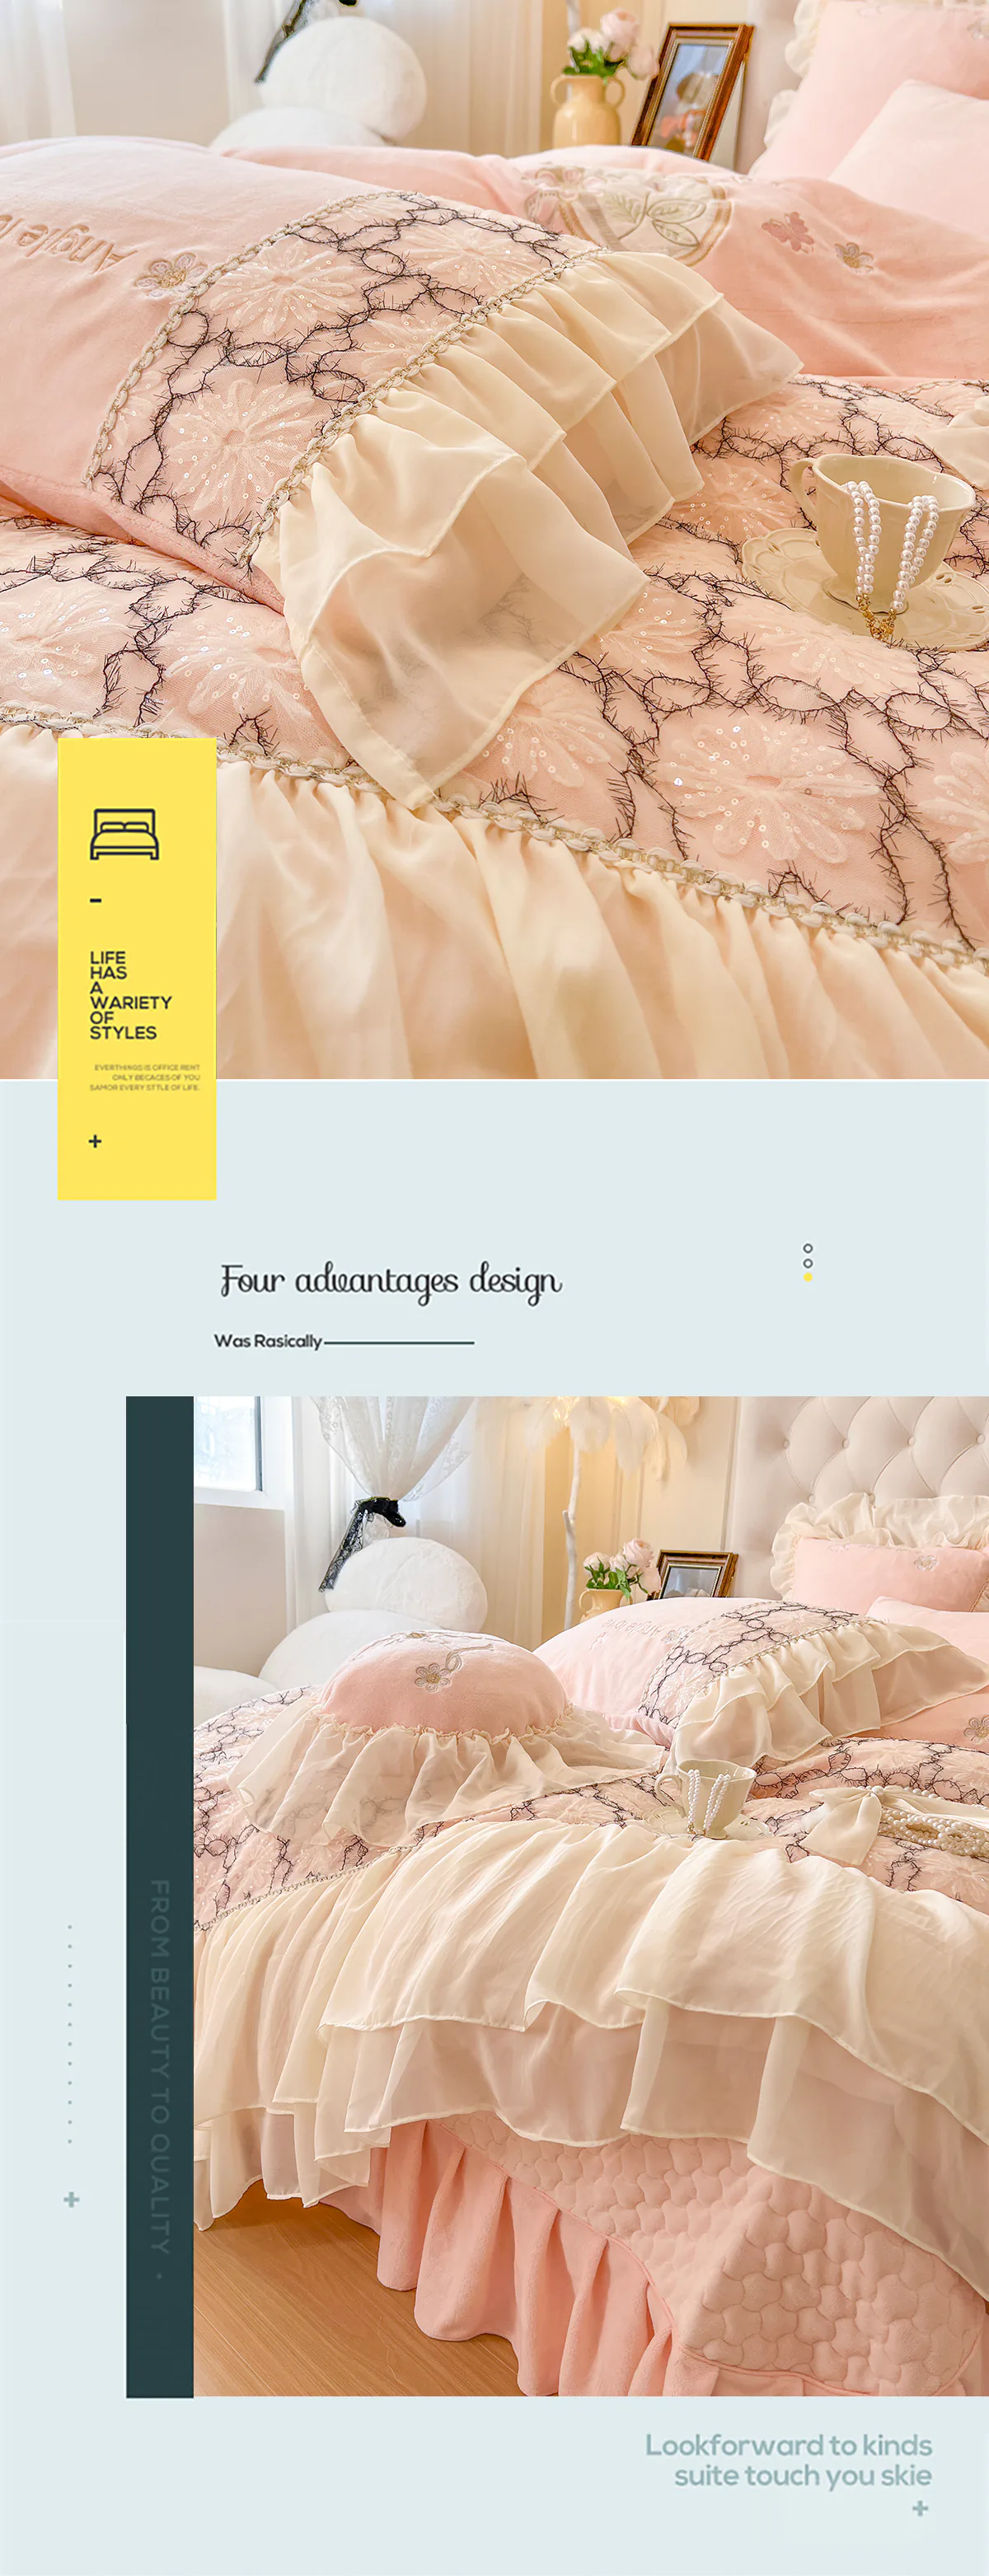 Luxury-Home-Textile-Milk-Fiber-Duvet-Cover-Bed-Sheet-4-Pcs-Set11